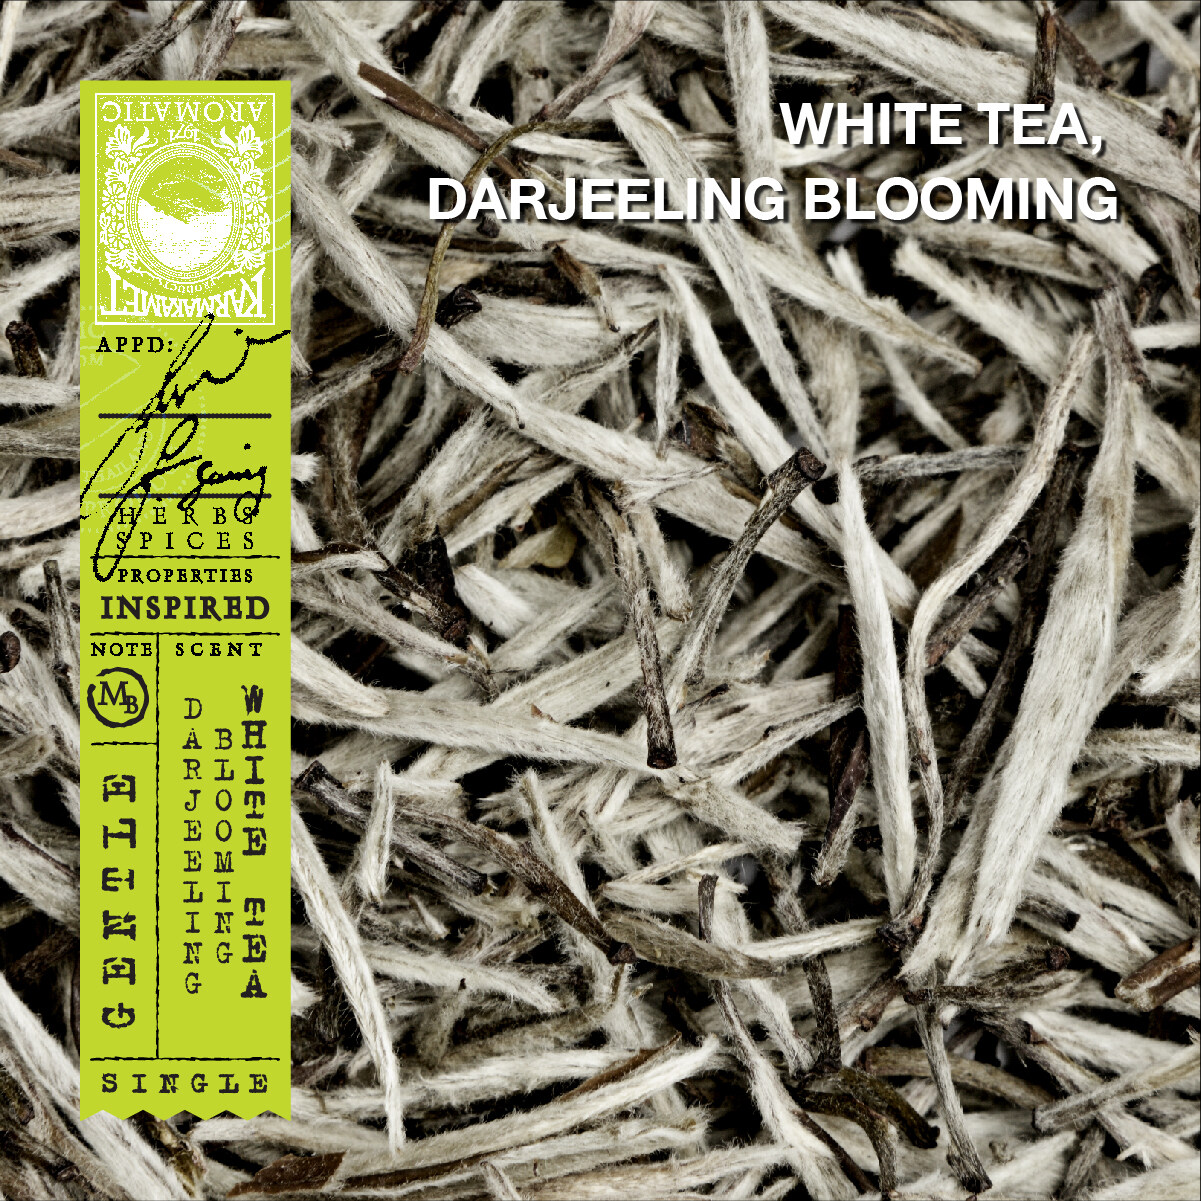 KARMAKAMET Original Room Perfume Diffuser / Single คามาคาเมต ก้านไม้หอมกระจายกลิ่น น้ำหอมบ้าน ก้านไม้หอม น้ำหอมปรับอากาศ บ้านหอม  กลิ่น Darjeeling Blooming White Teaปริมาณ (มล.) 200